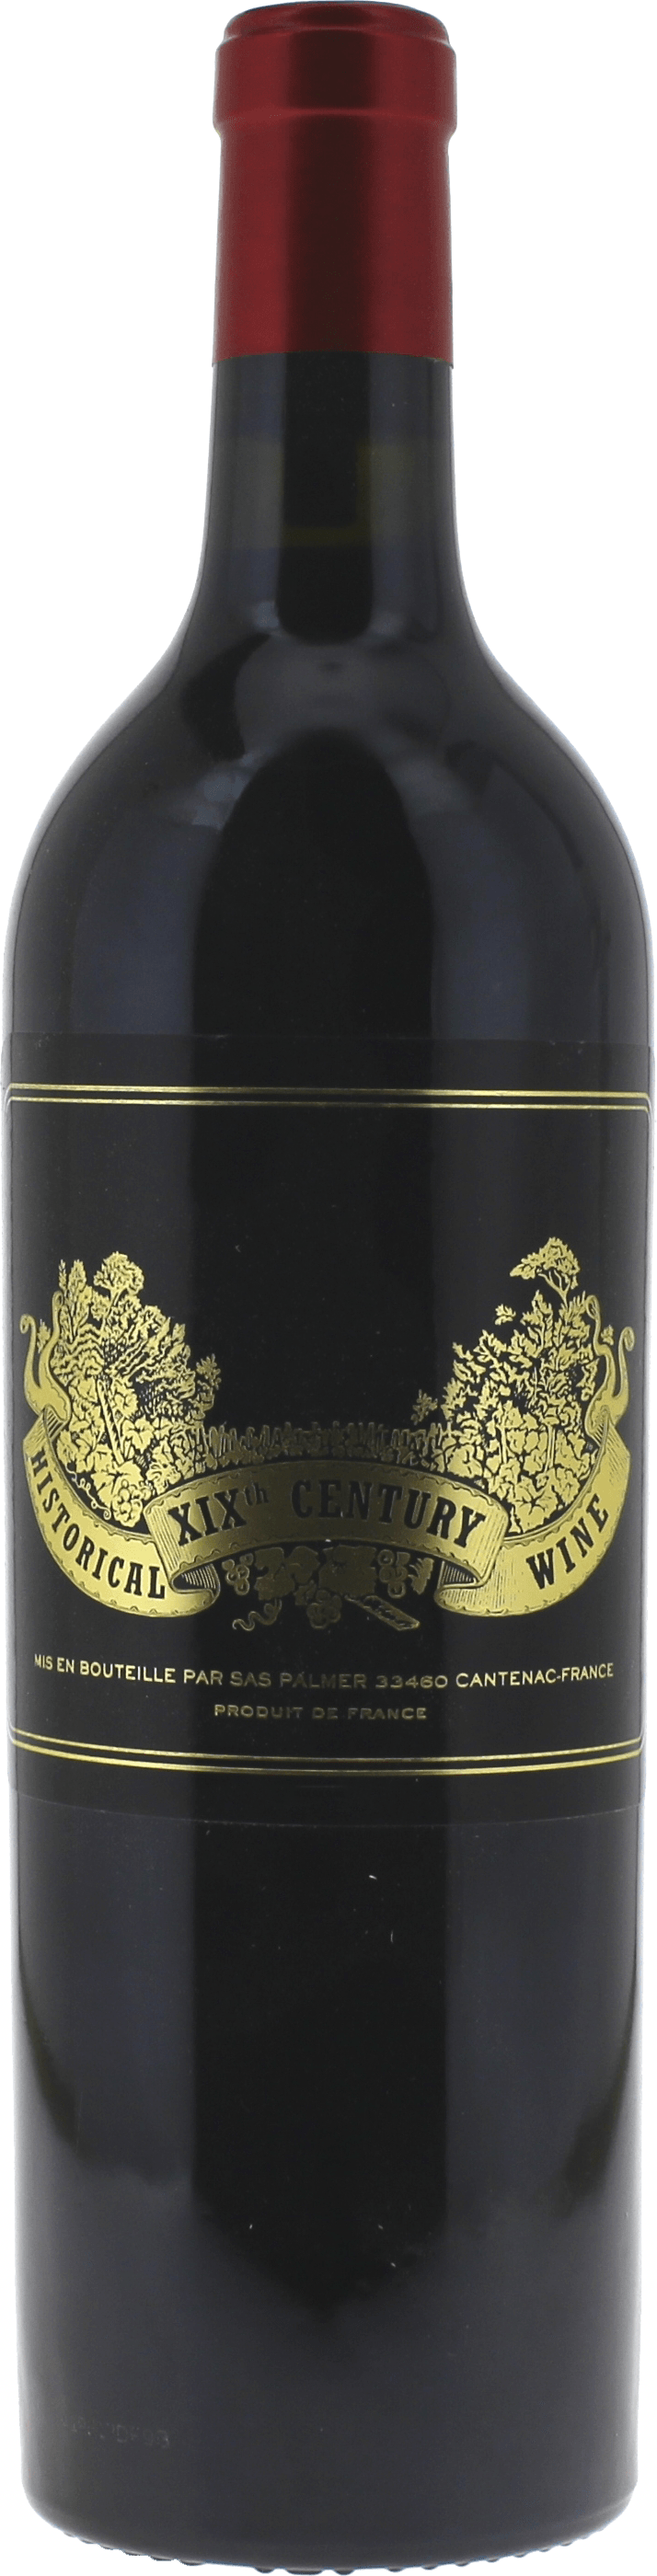 Historical 19 century wine blend chateau palmer 2017 3me Grand cru class Margaux, Bordeaux rouge